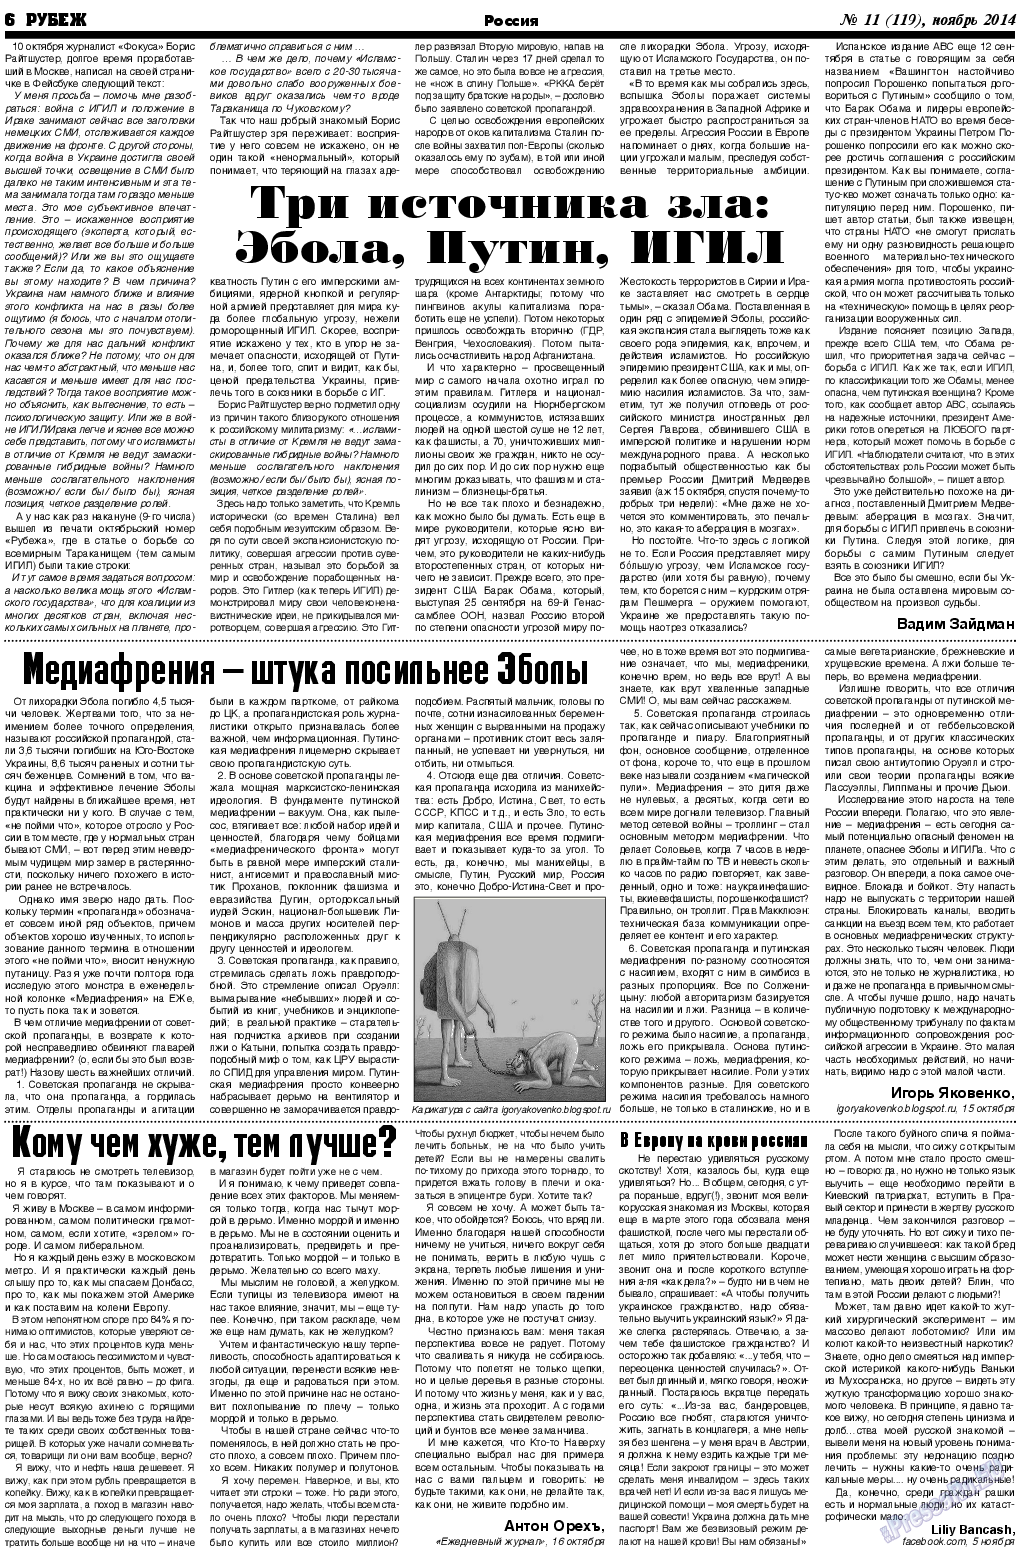 Рубеж, газета. 2014 №11 стр.6